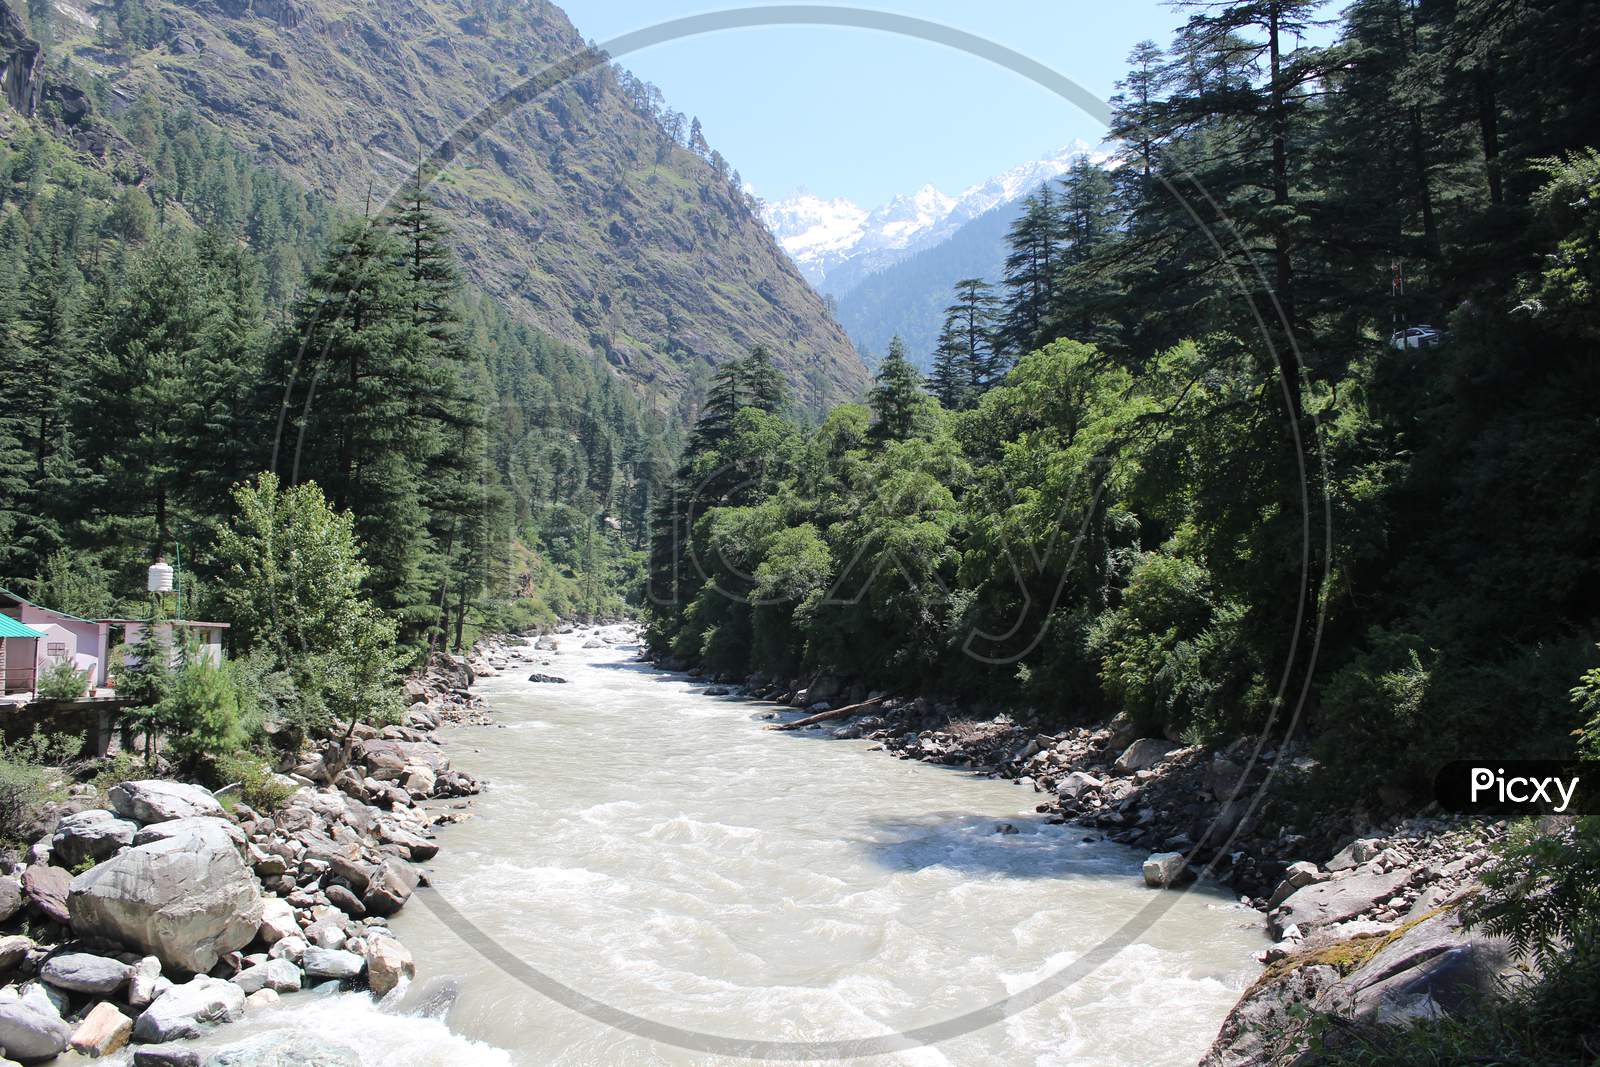 Parvati river valley at Kasol, Himachal Pradesh, India.